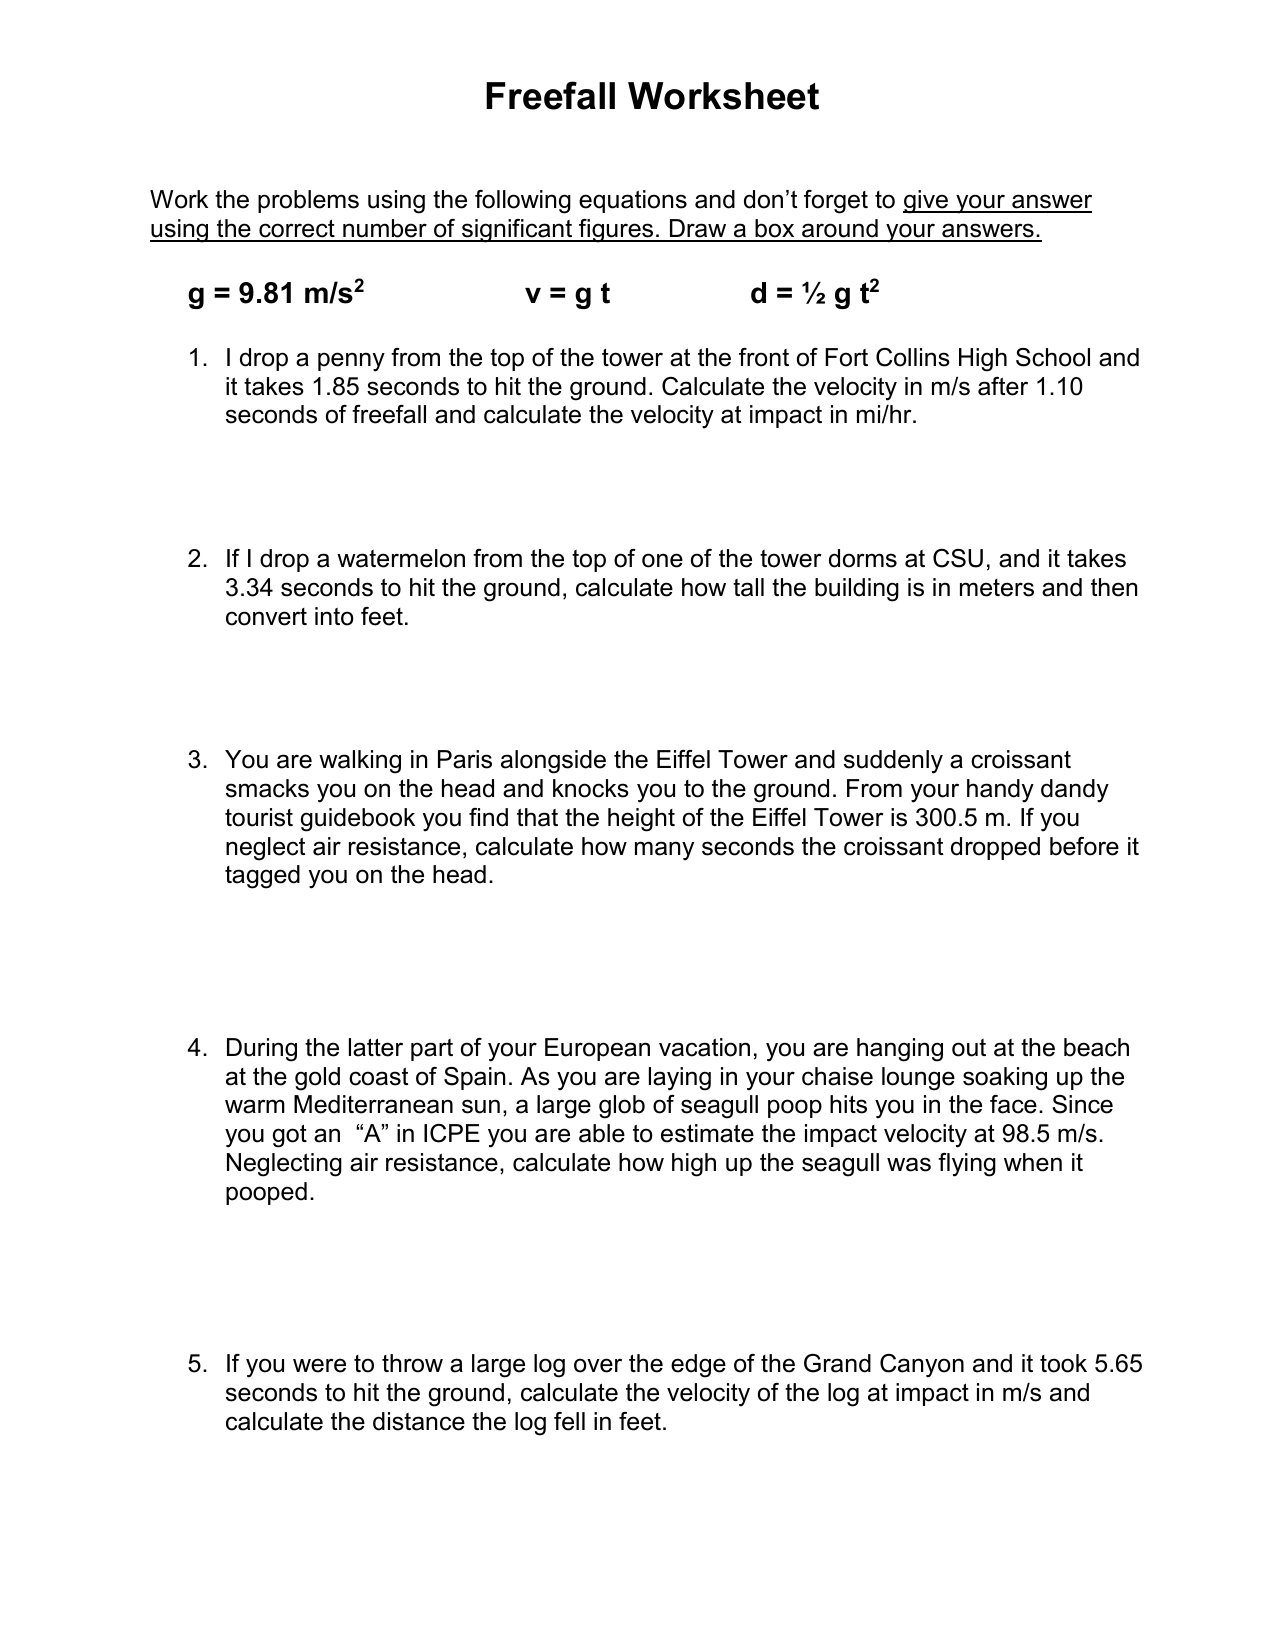 Freefall Worksheet (11) Inside Free Fall Problems Worksheet